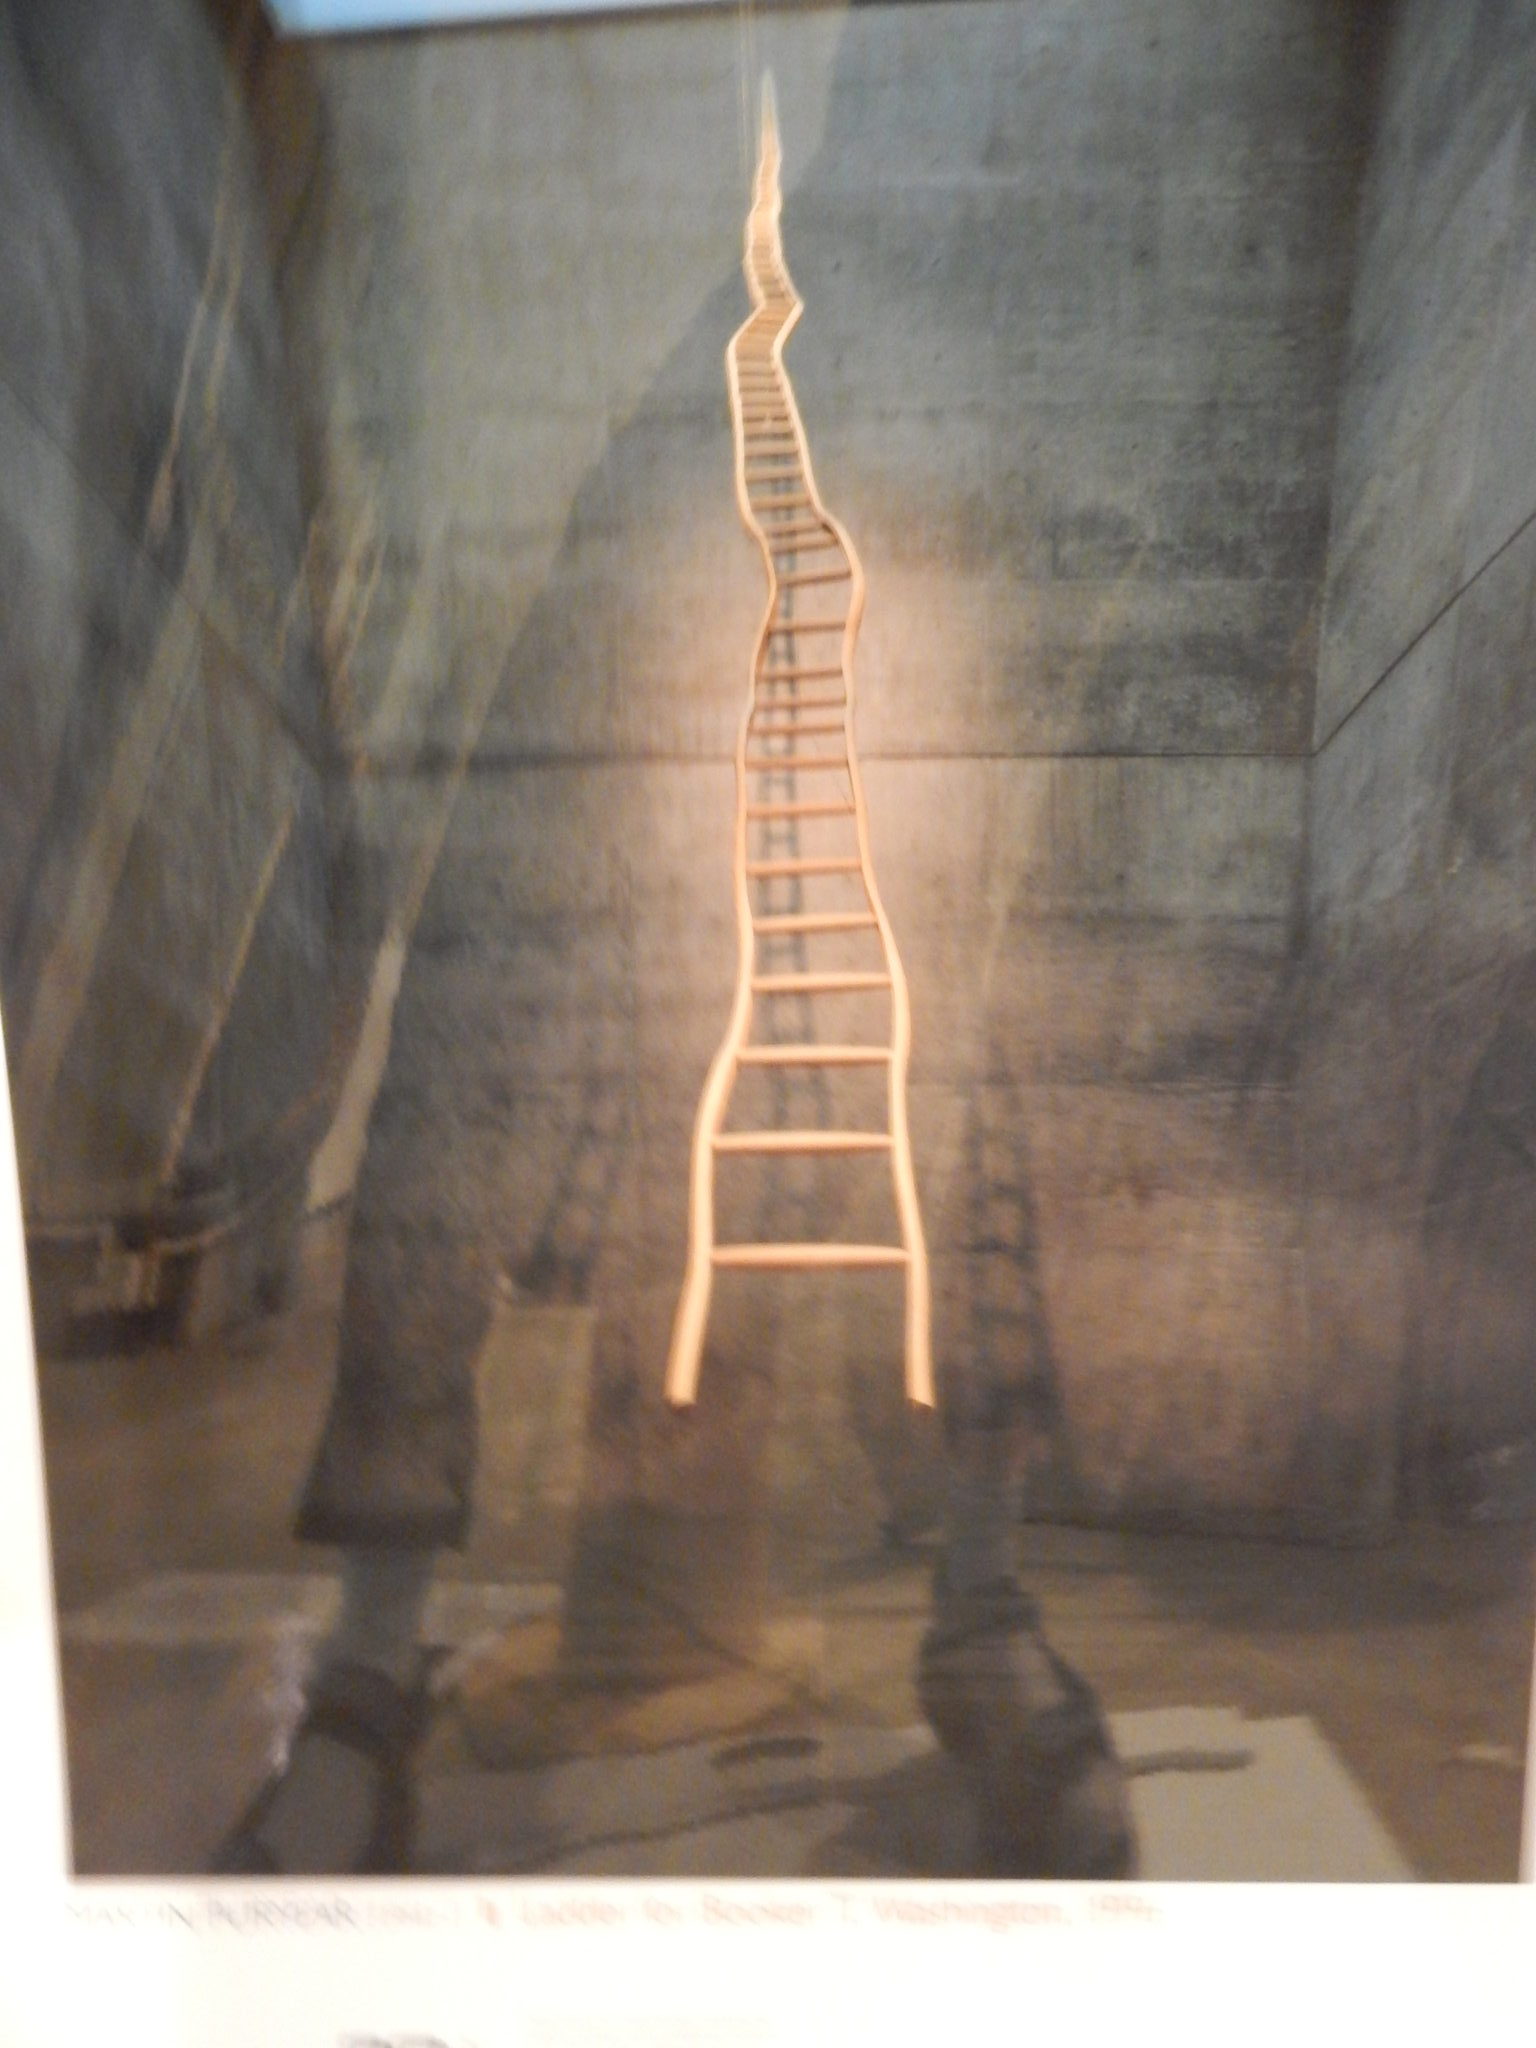 photo of Martin Puryear's sculpture "Ladder for Booker T. Wahsington"